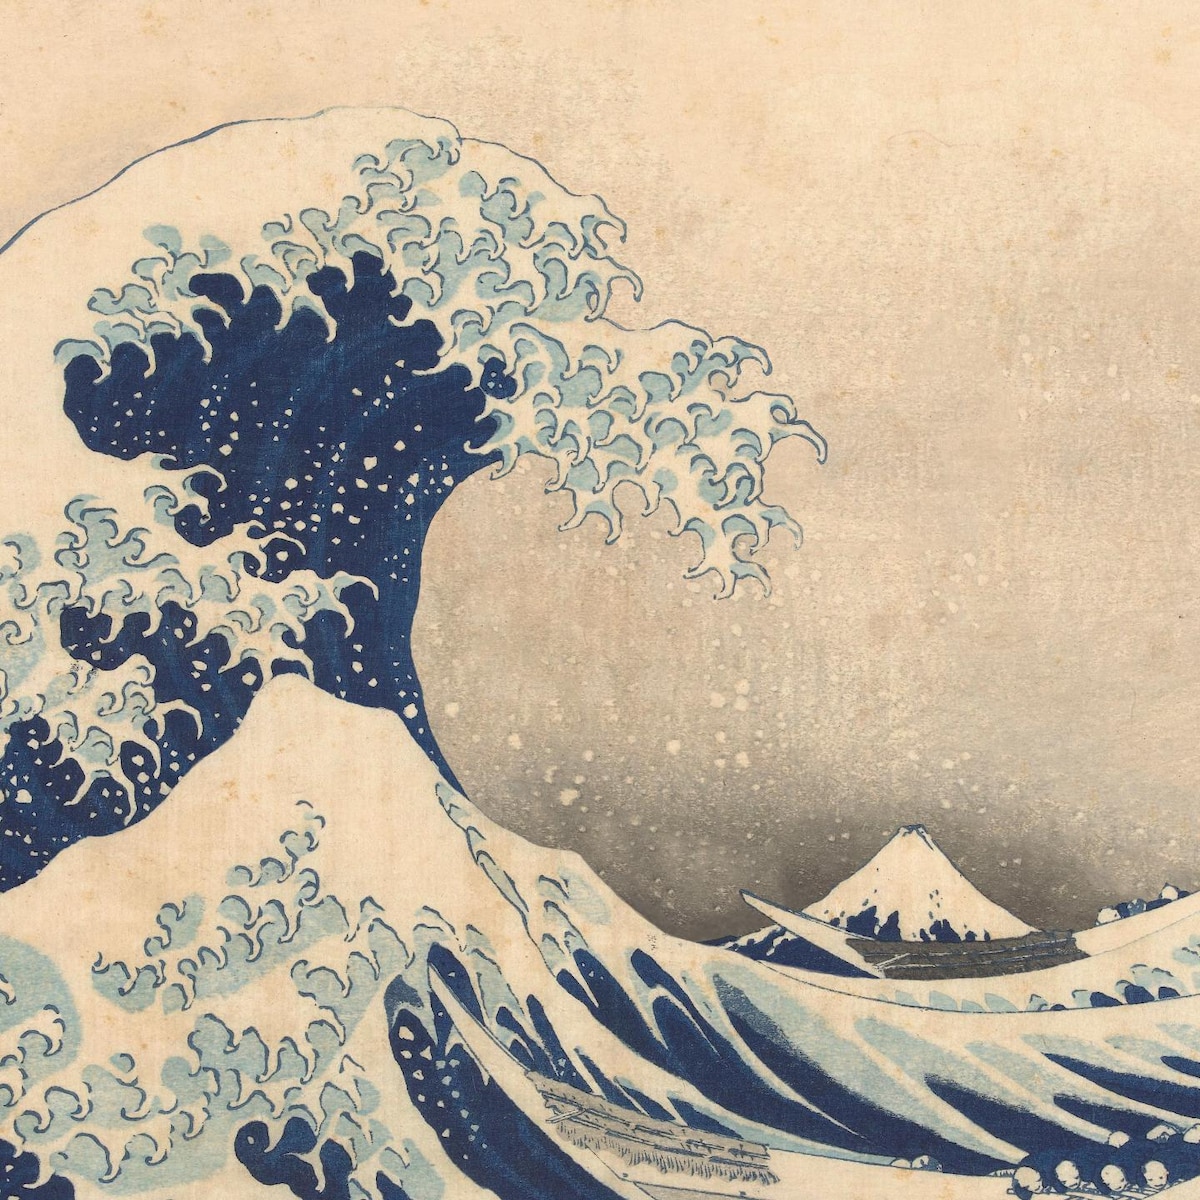 [ANIMATED] The Great Wave off Kanagawa